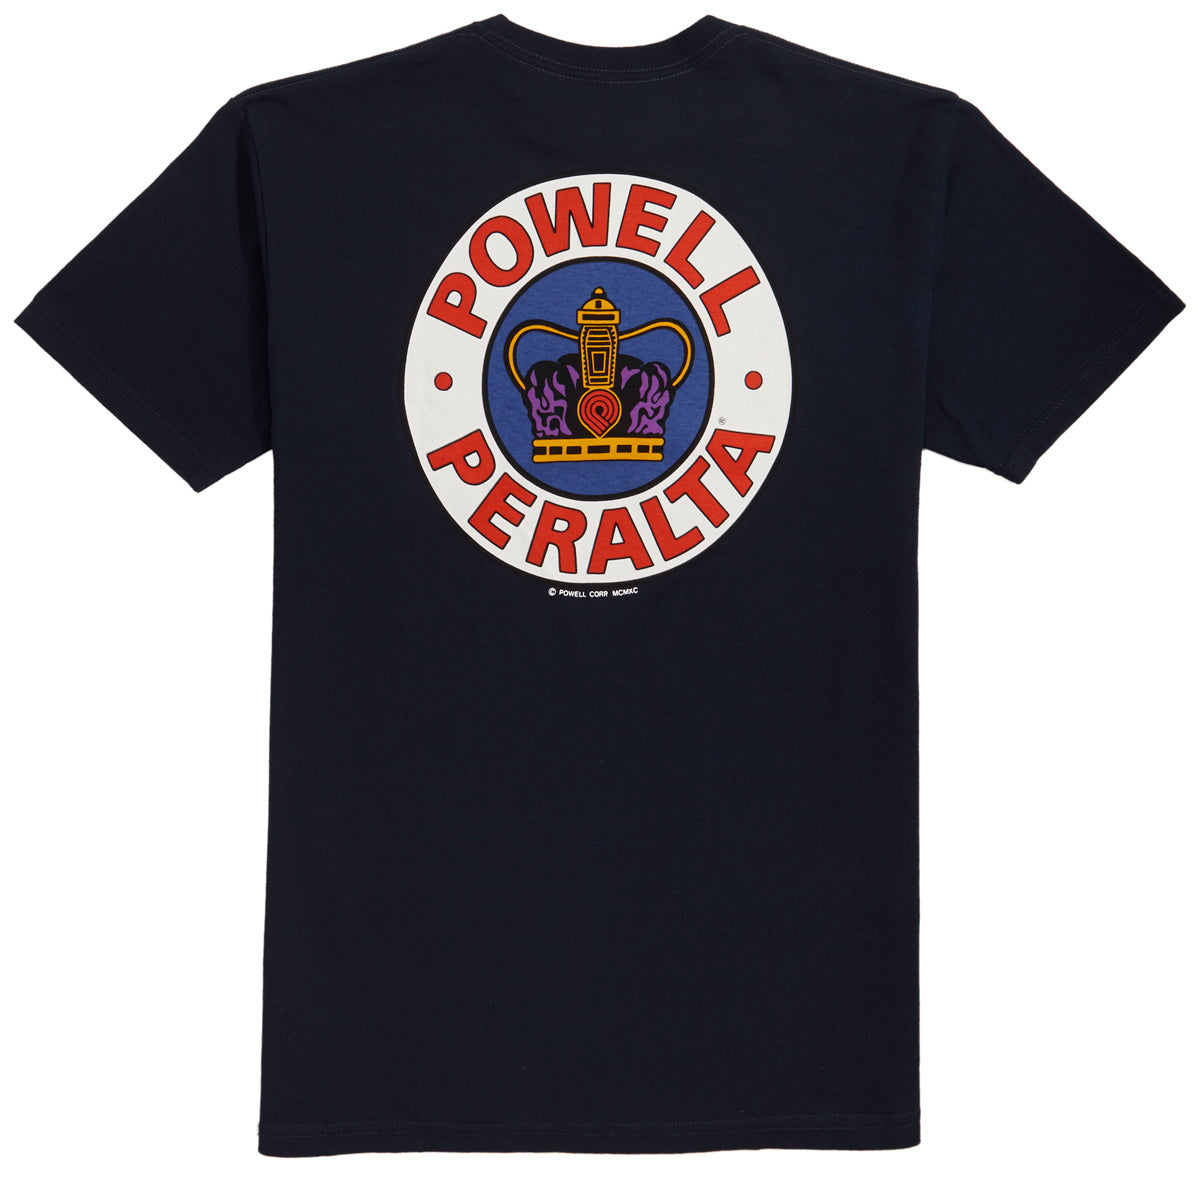 Powell Peralta Supreme Long Sleeve T-Shirt - Black